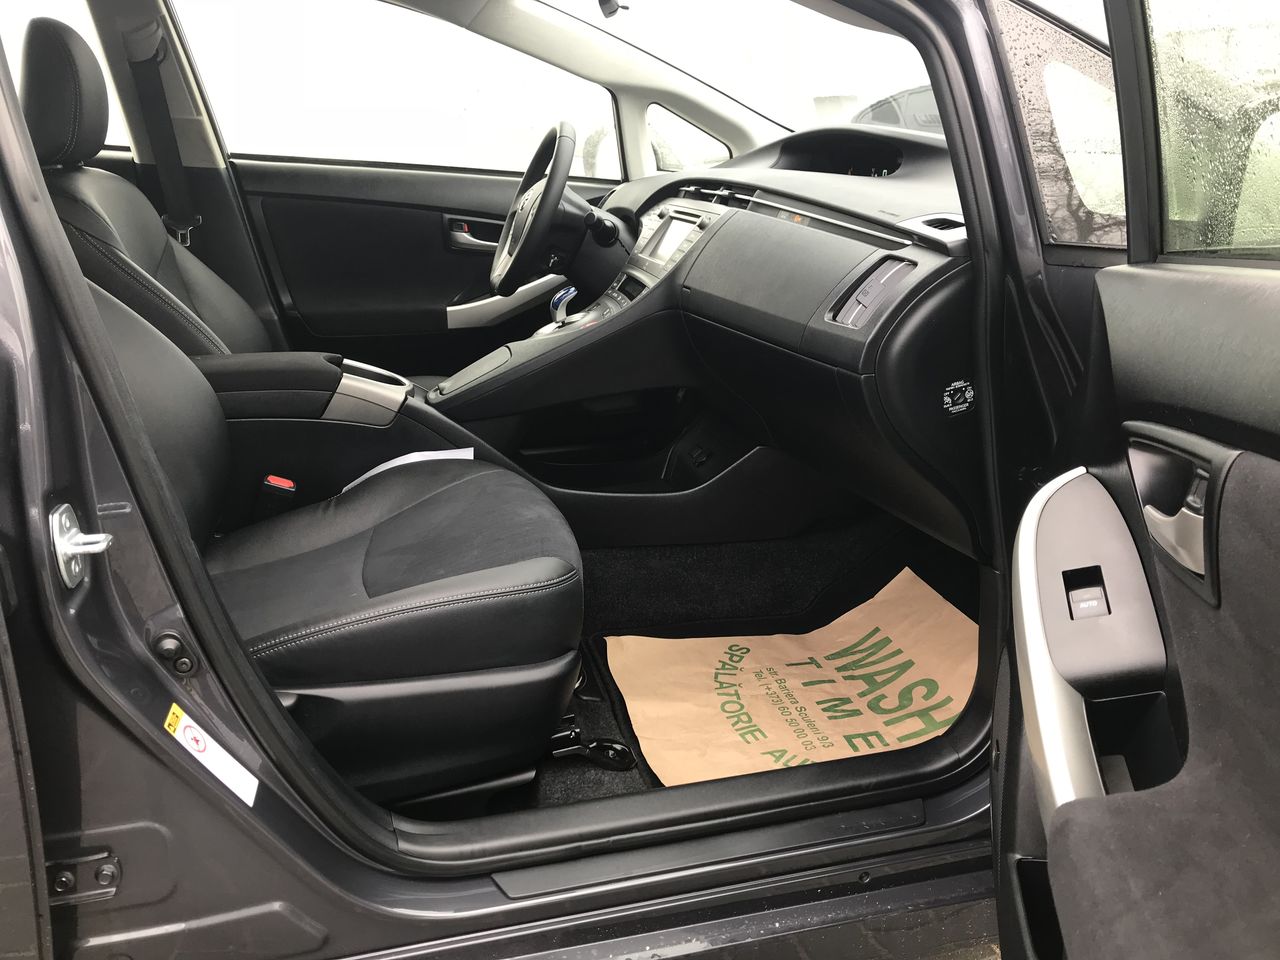 Toyota Prius -Masini la Procat Chisinău Ieftine4